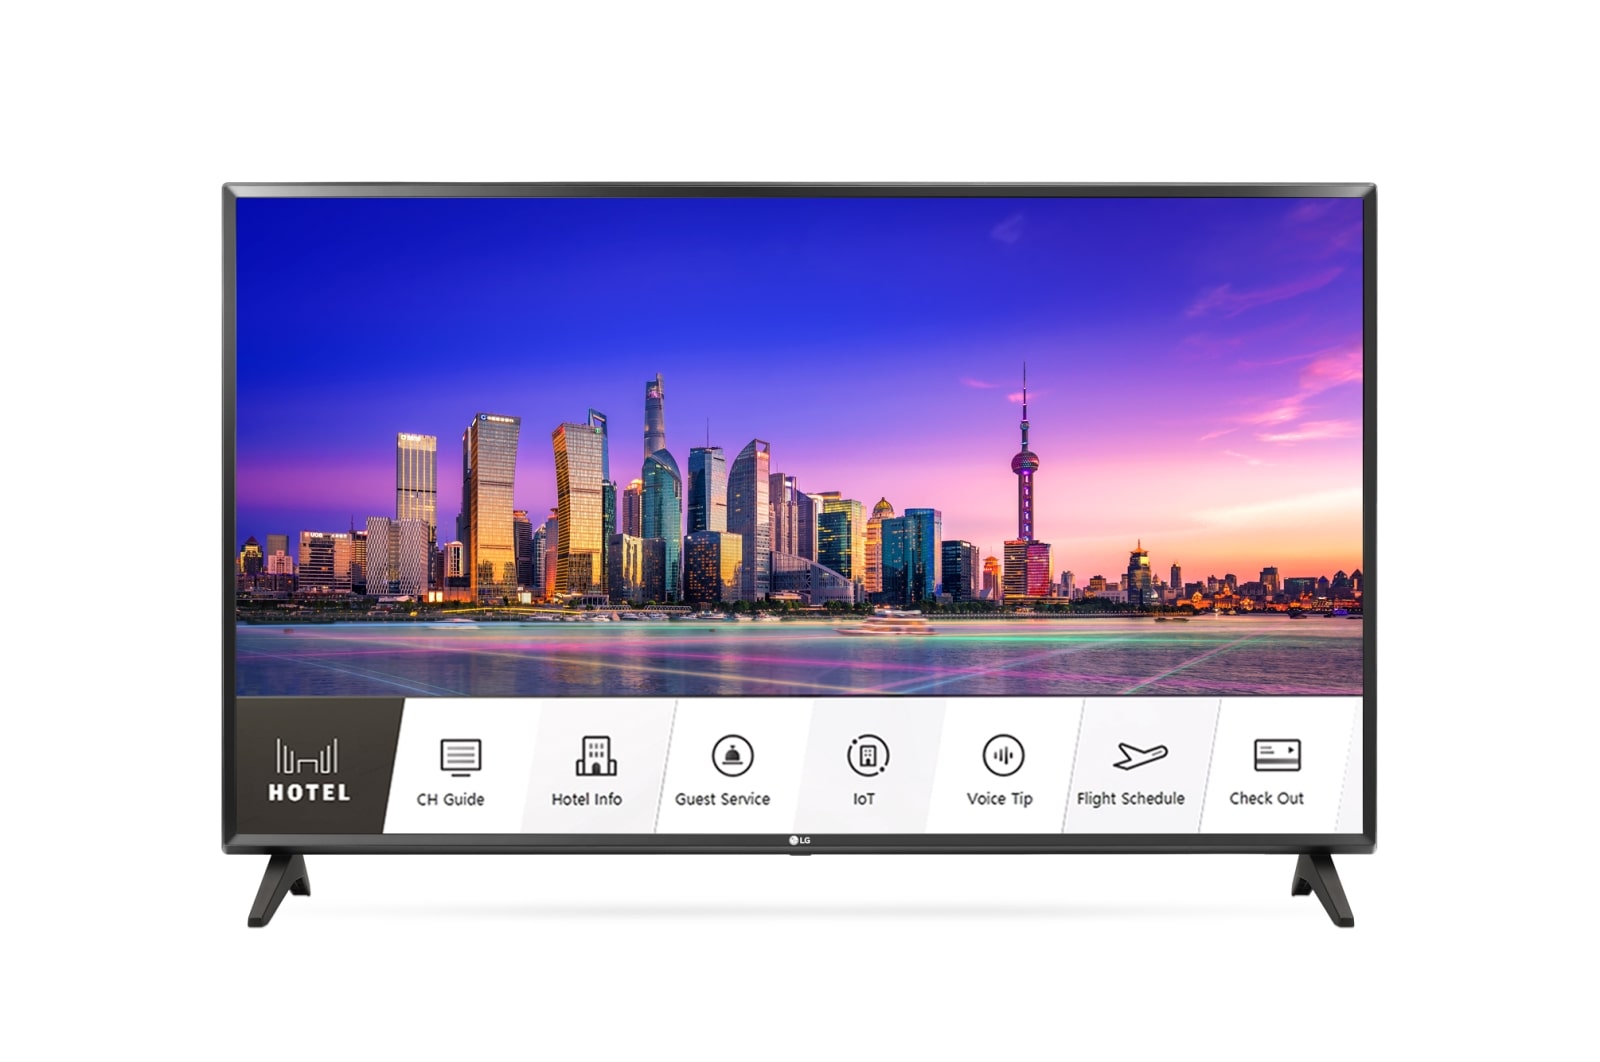 Télévision LG 32 LED Smart TV + support mural offert 